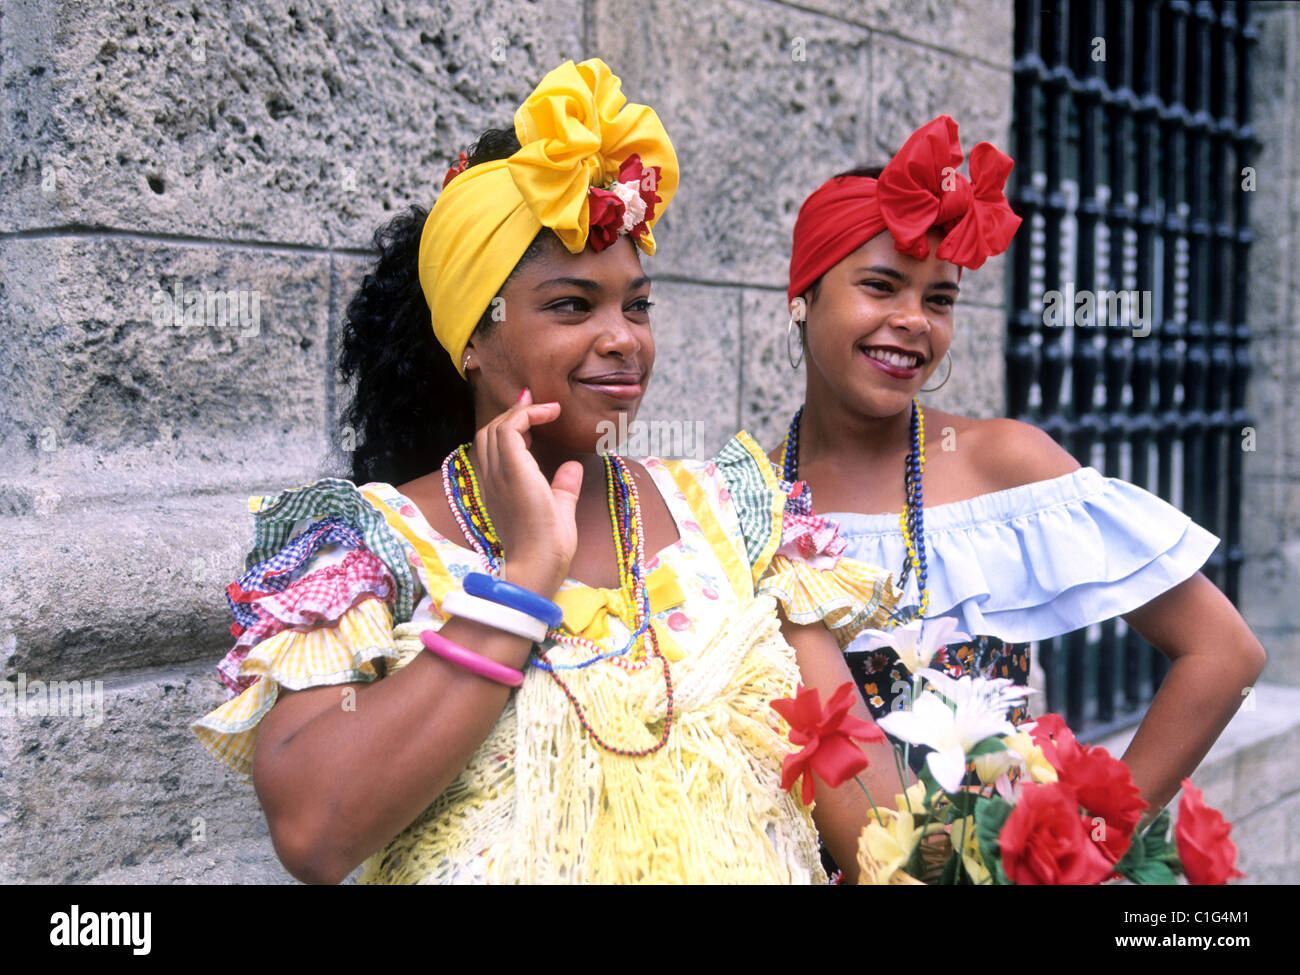 Cuba, Santiago, cuban girls in folklorics costume Stock Photo